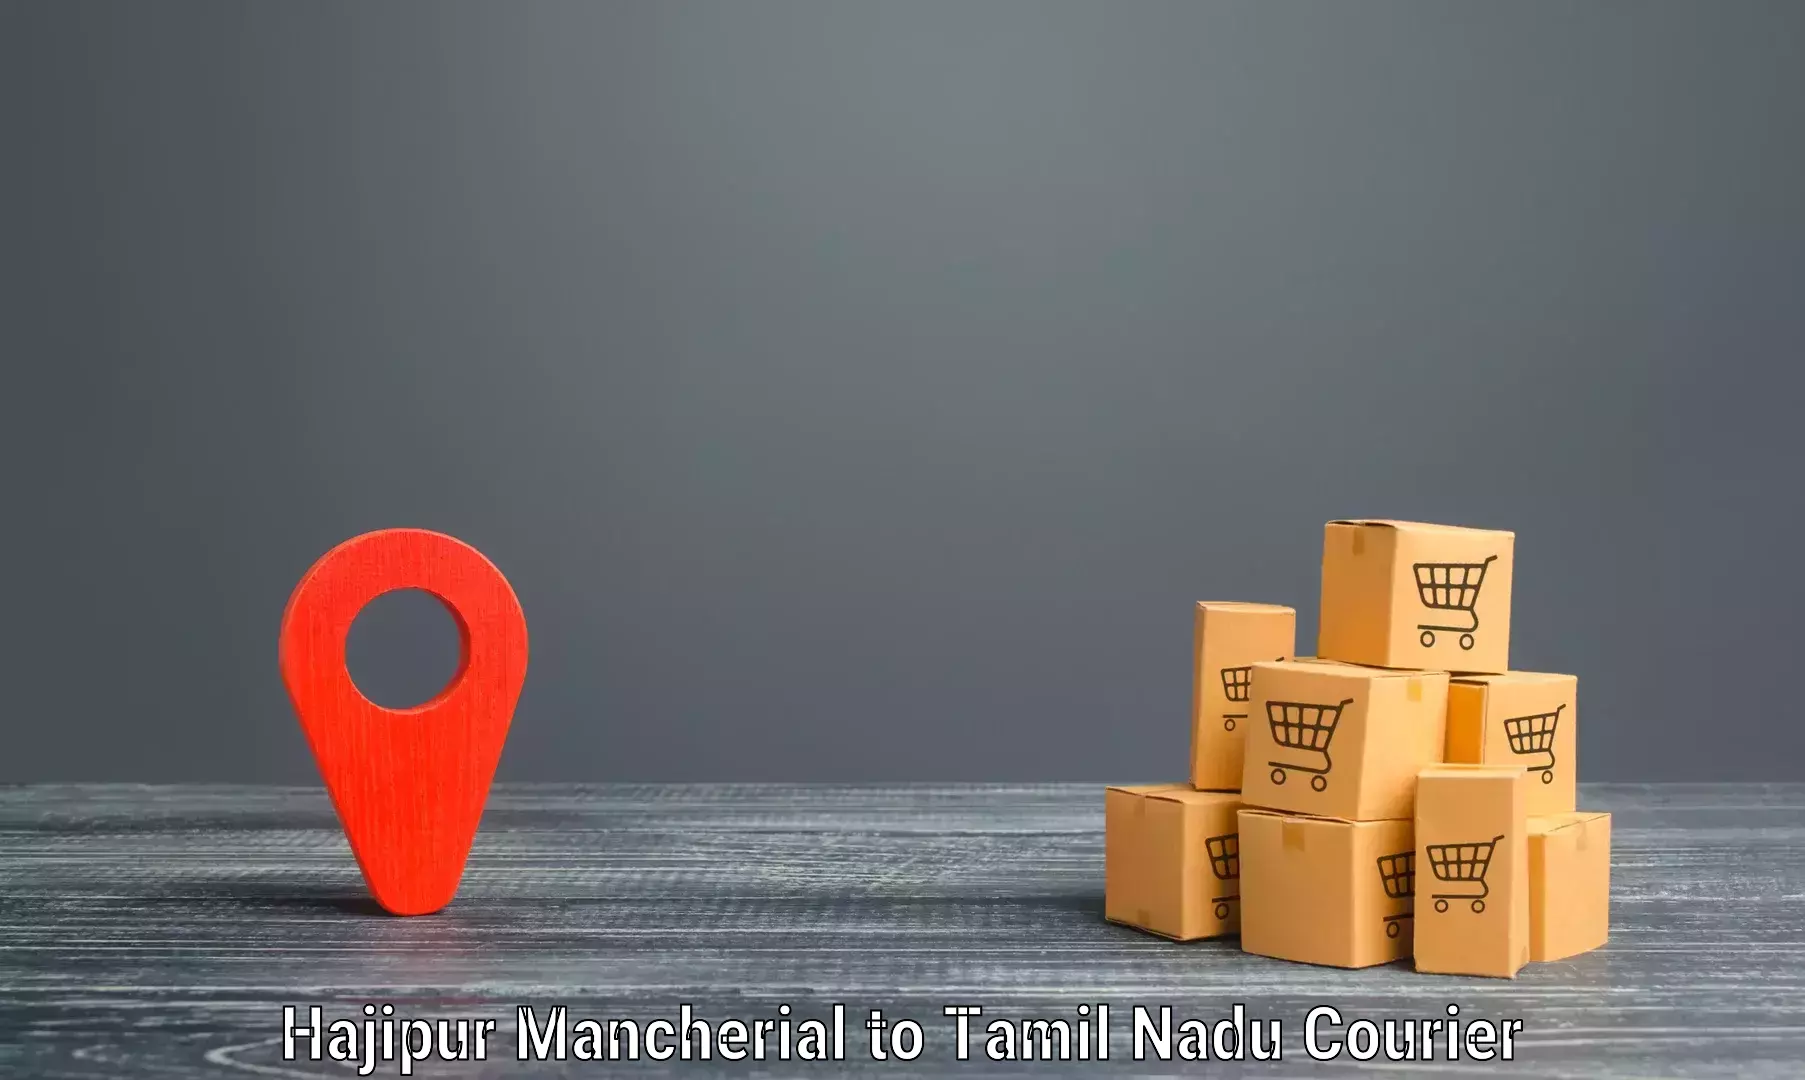 Bulk courier orders Hajipur Mancherial to Tamil Nadu